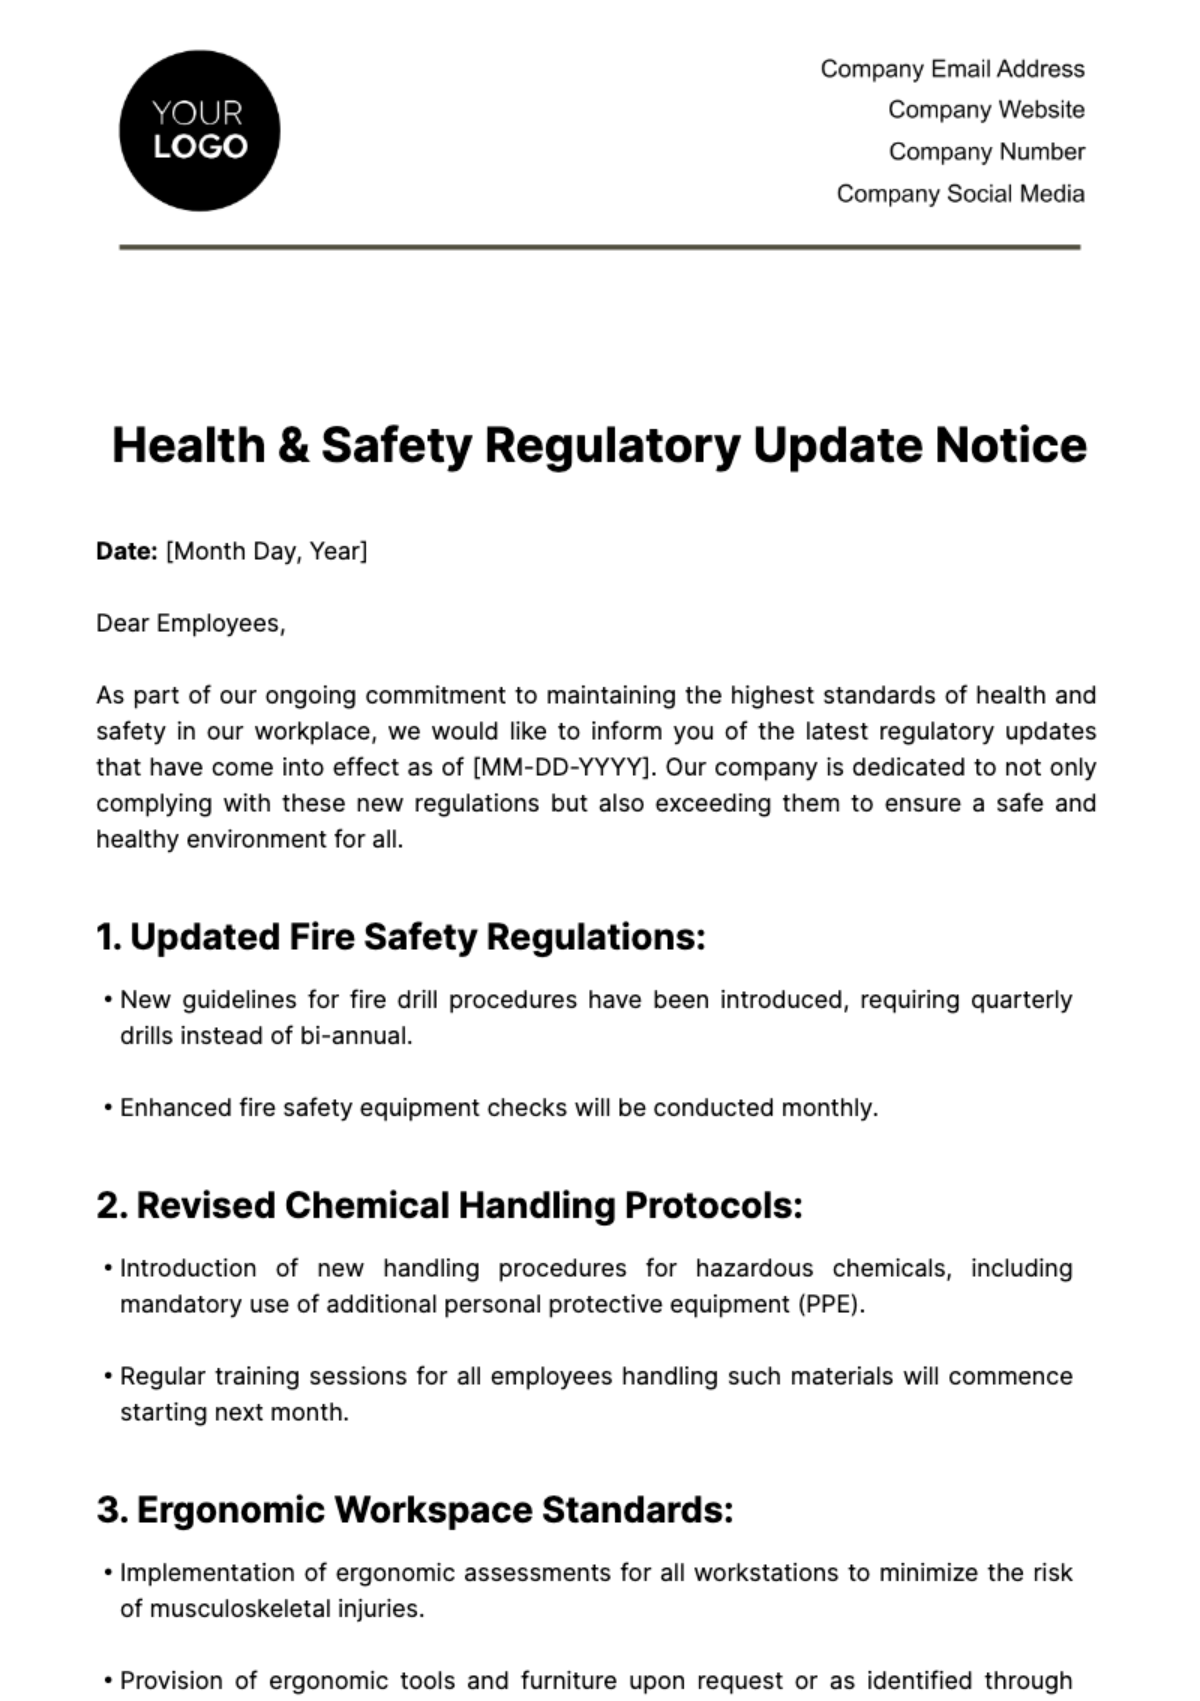 Health & Safety Regulatory Update Notice Template